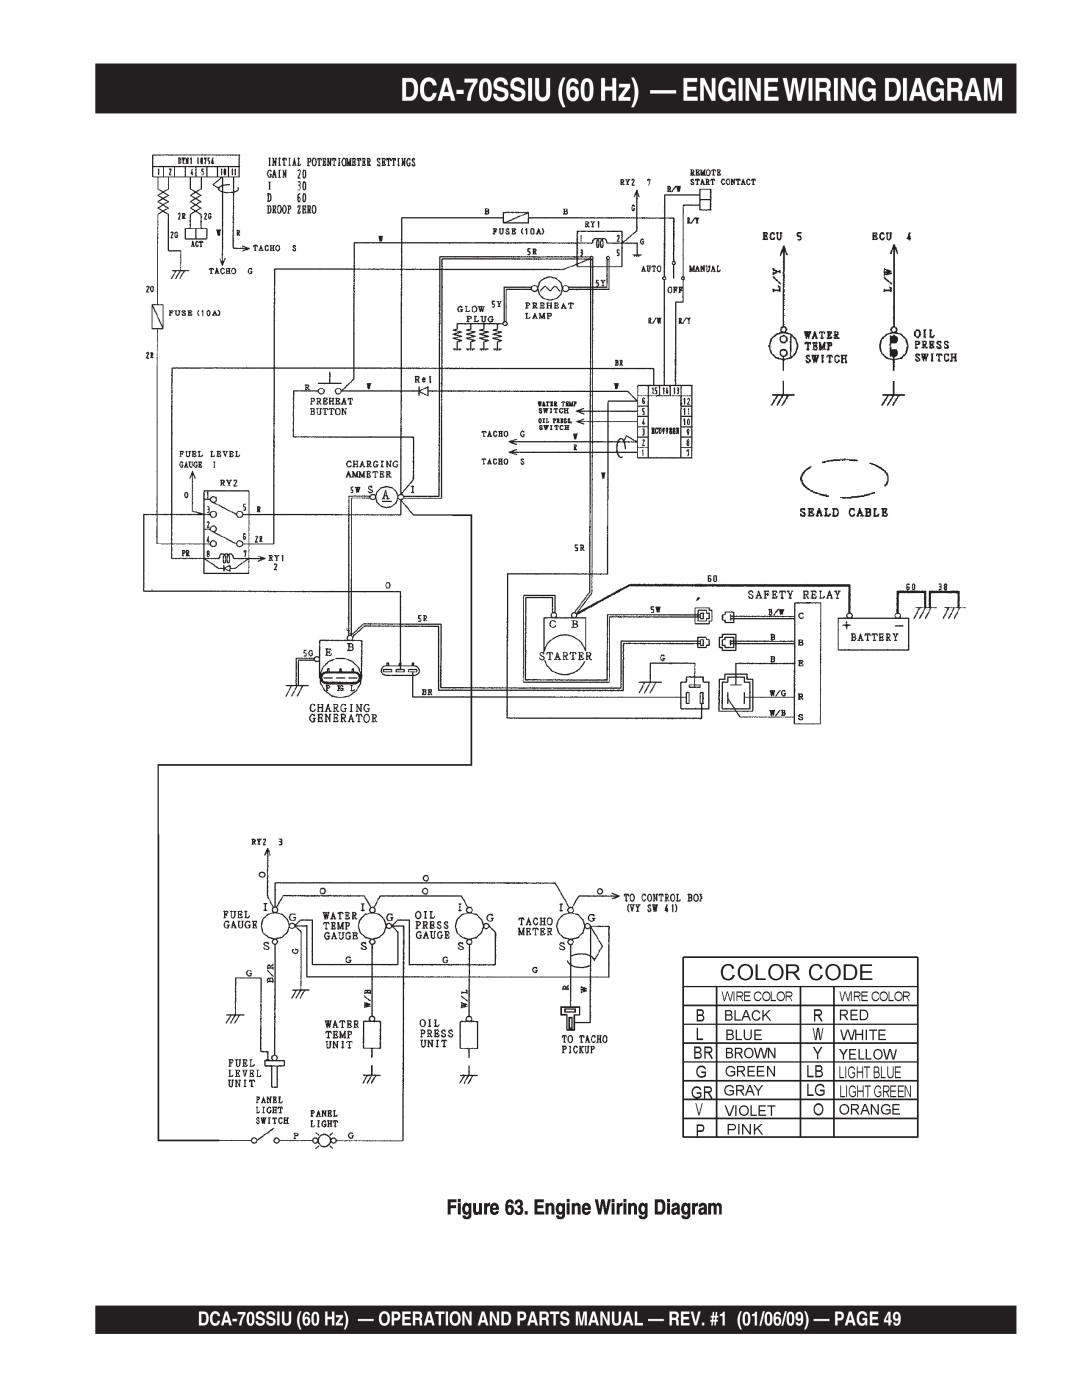 Multiquip M2870300504 operation manual DCA-70SSIU 60 Hz - ENGINEWIRING DIAGRAM, Engine Wiring Diagram 